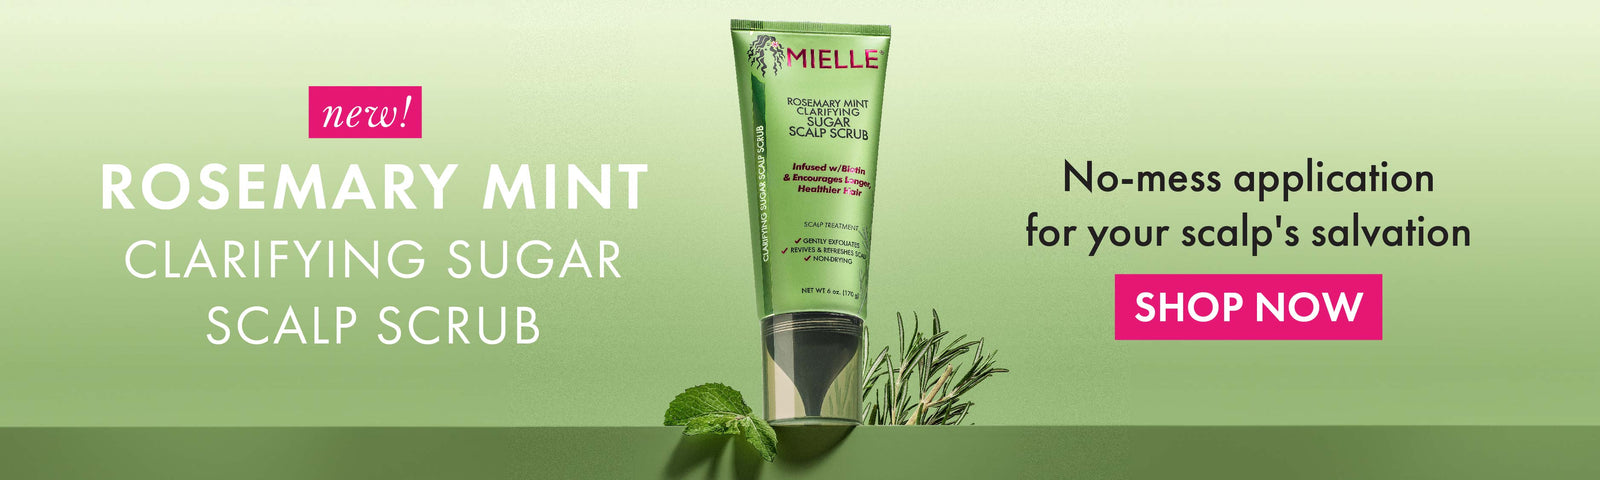 Rosemary mint clarifying sugar scalp scrub a natural hair products by mielle